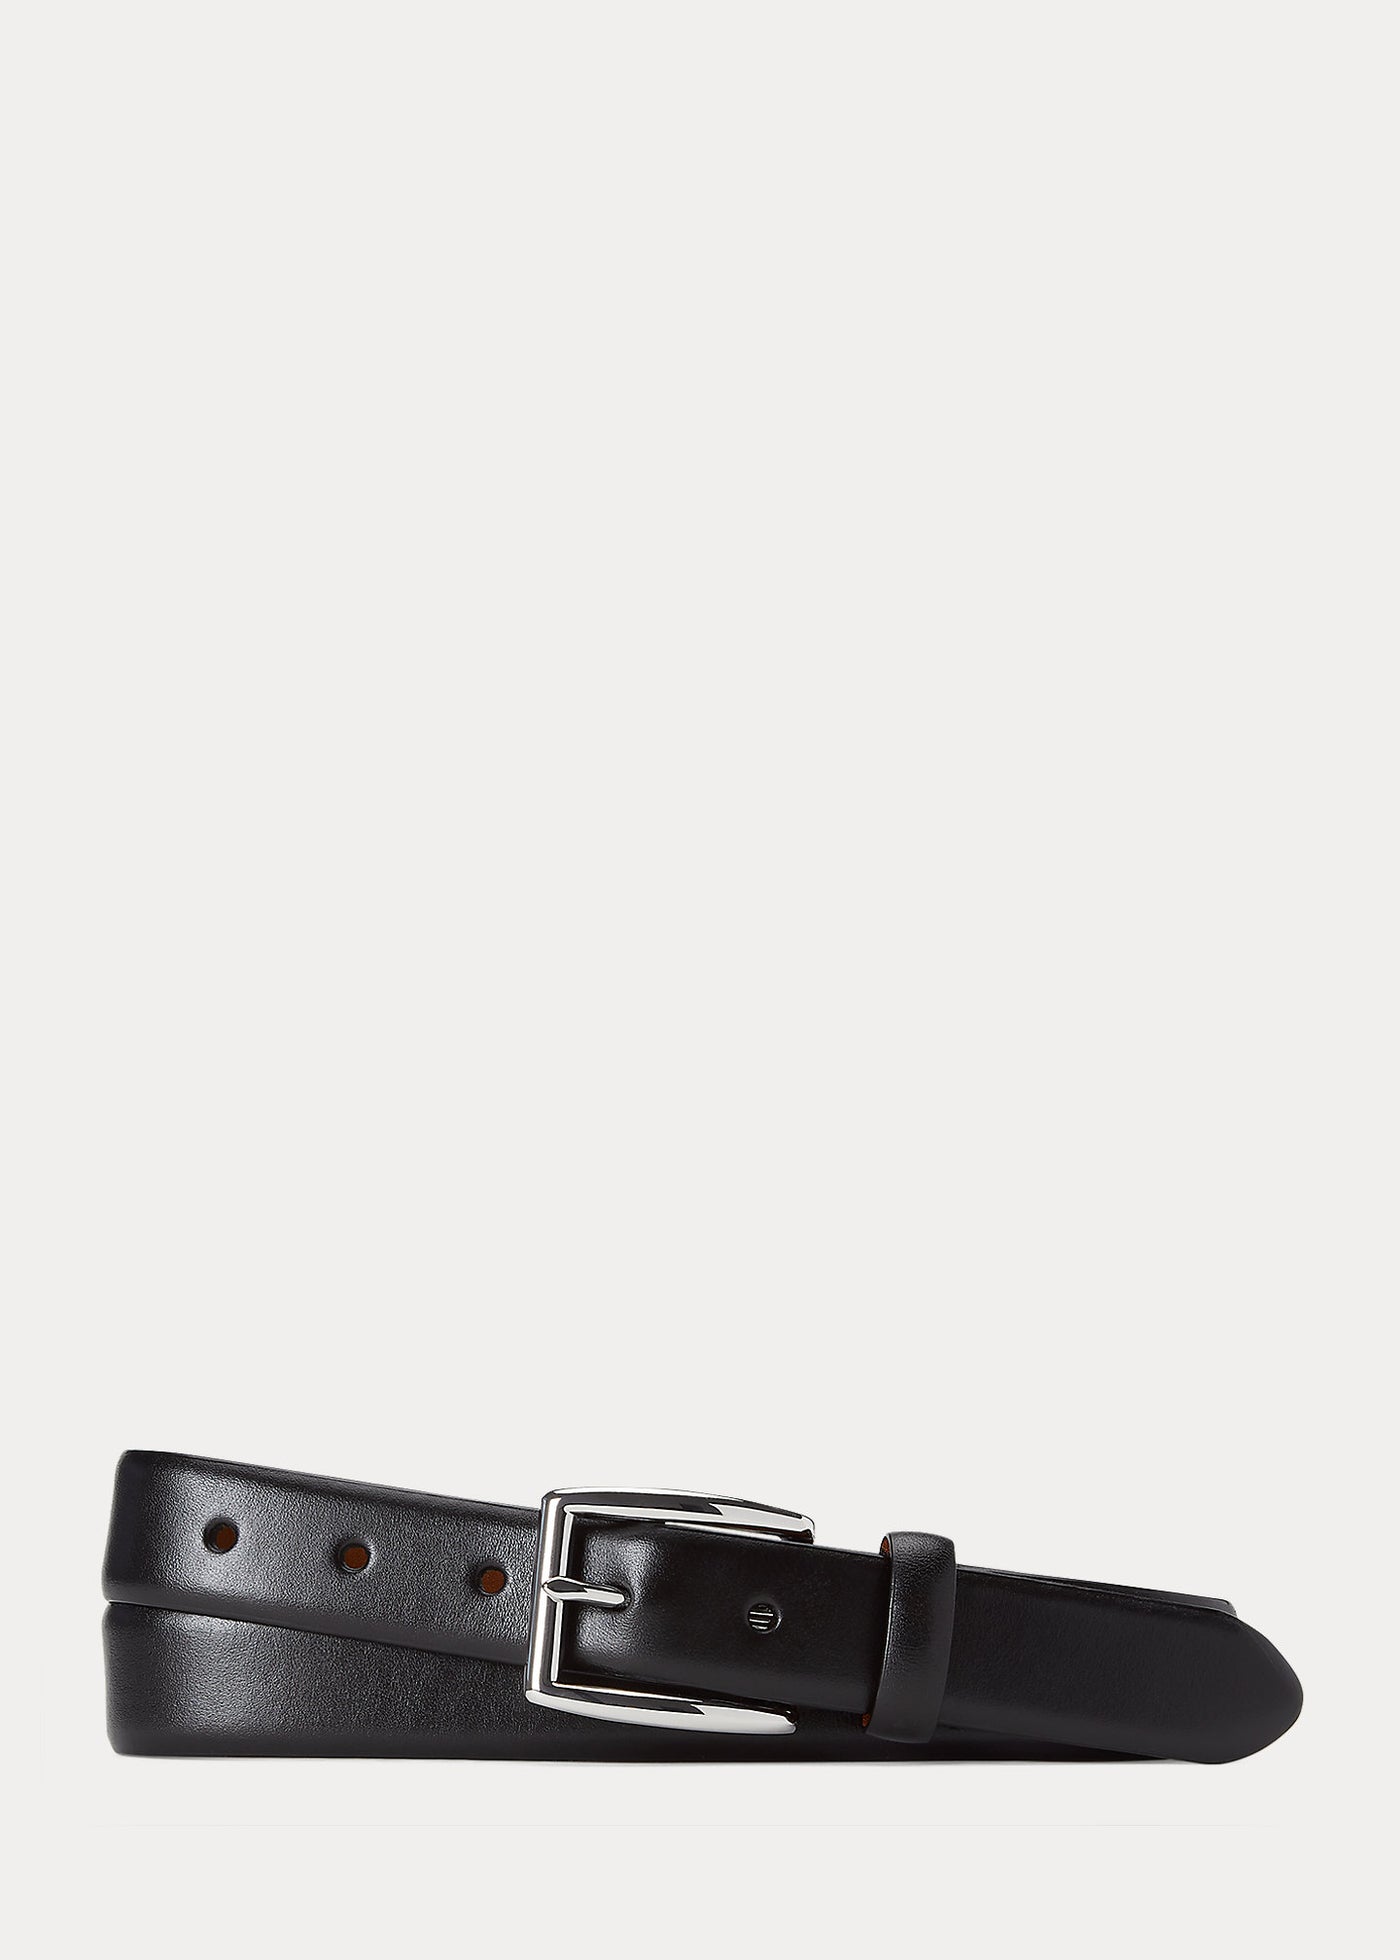 Ralph Lauren Harness Leather Dress Belt | Black